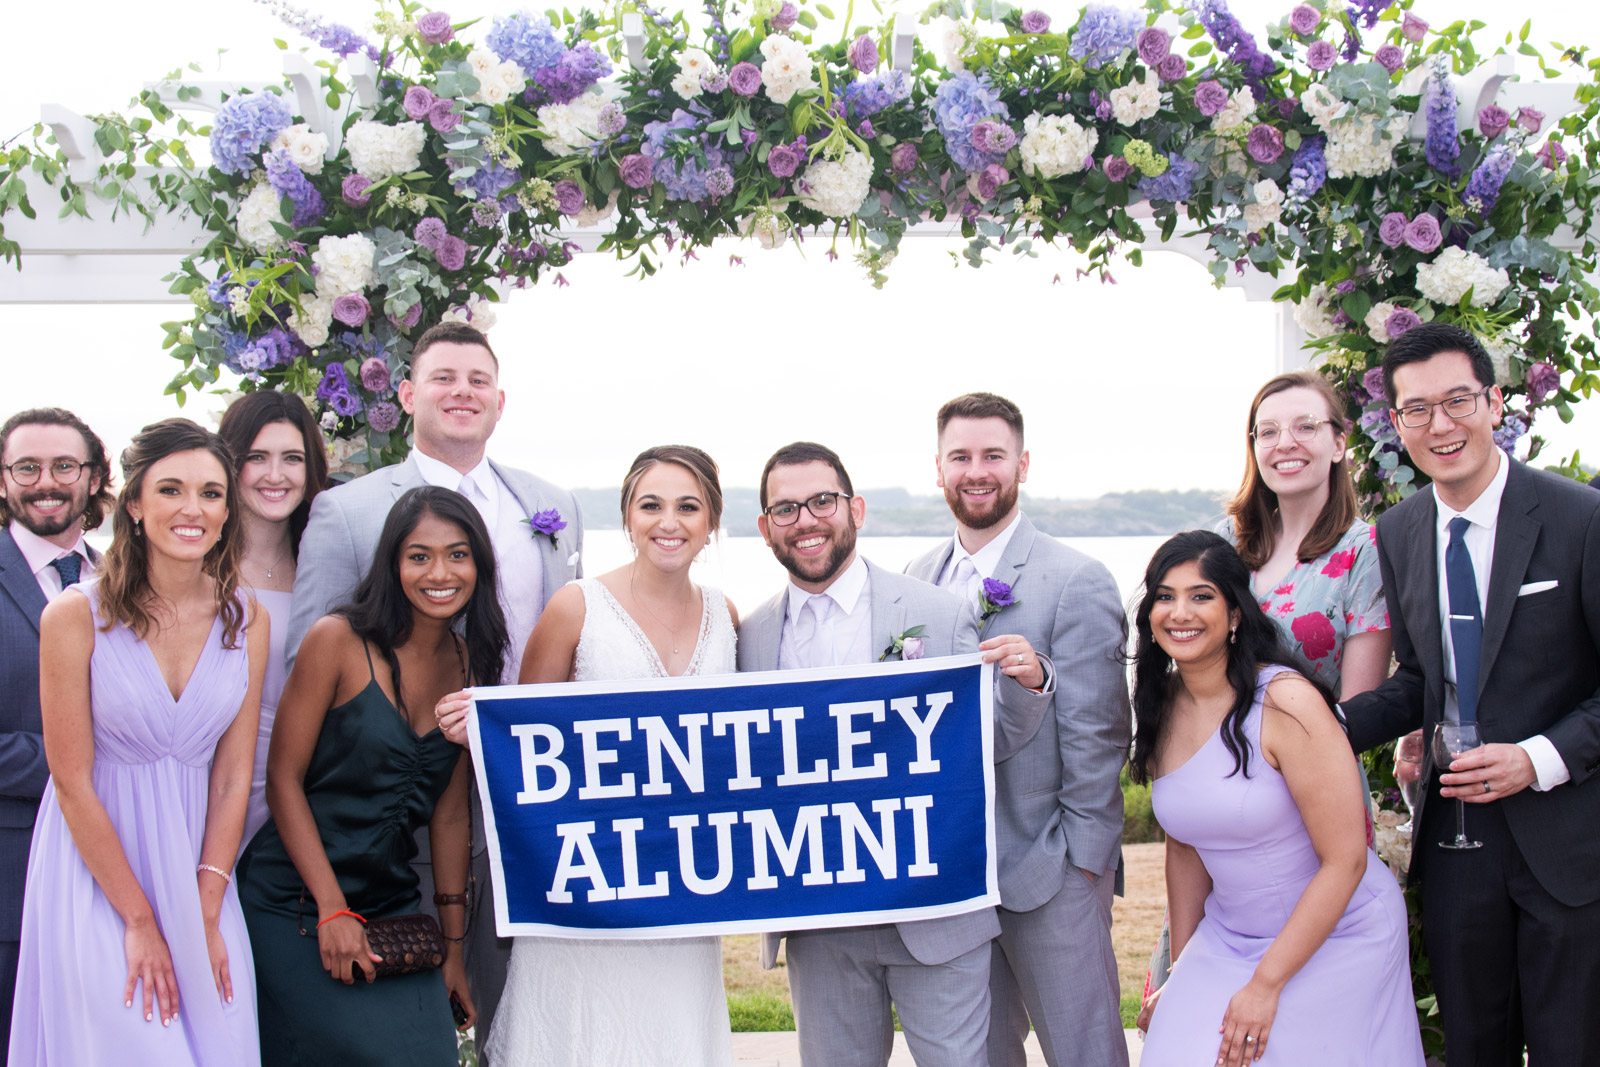 Bentley alumni posing for a wedding photo